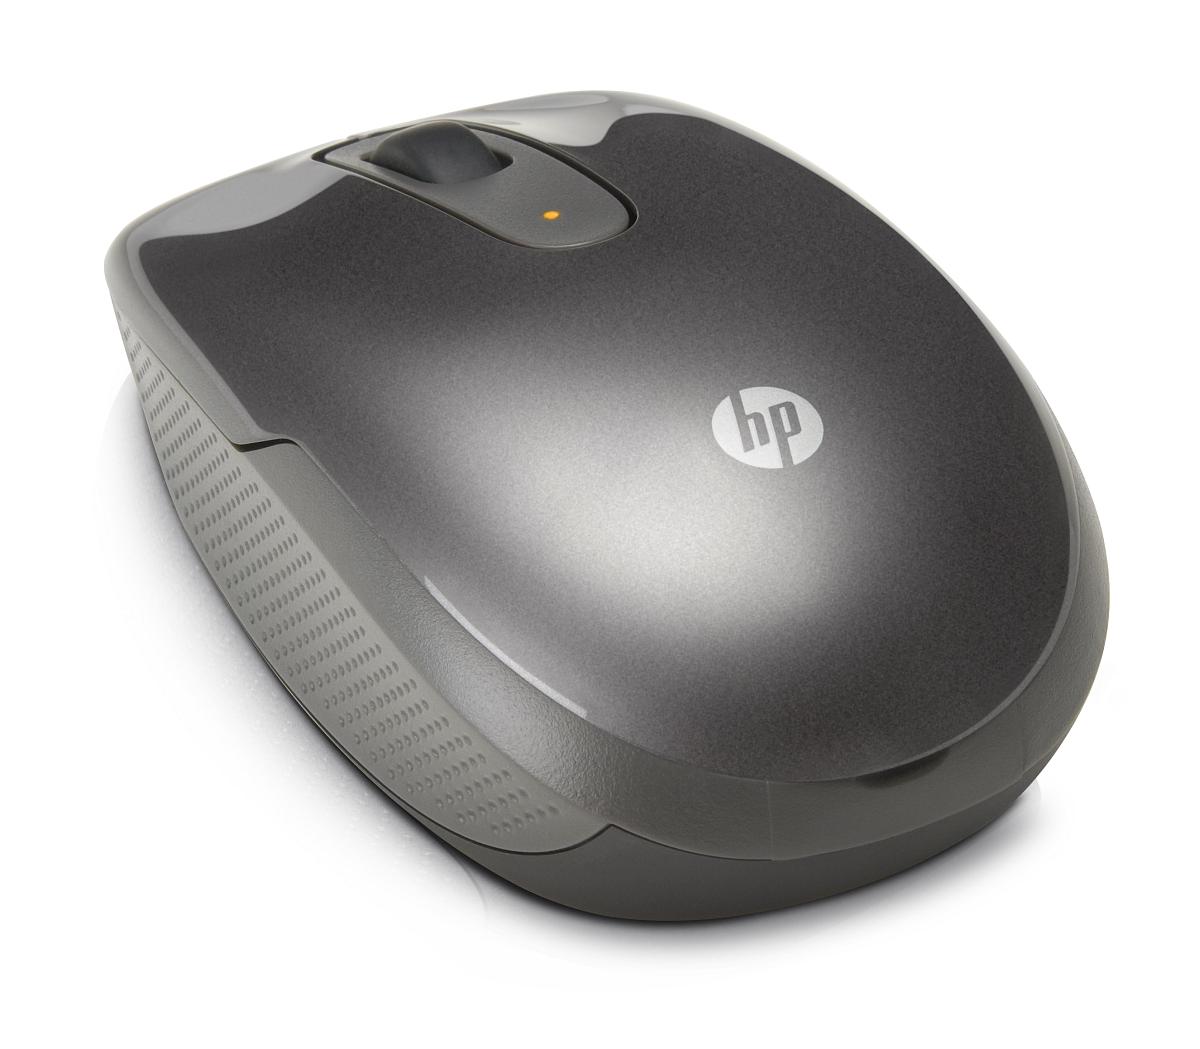 Bezdrátová myš HP - Charcoal Grey (LR918AA)